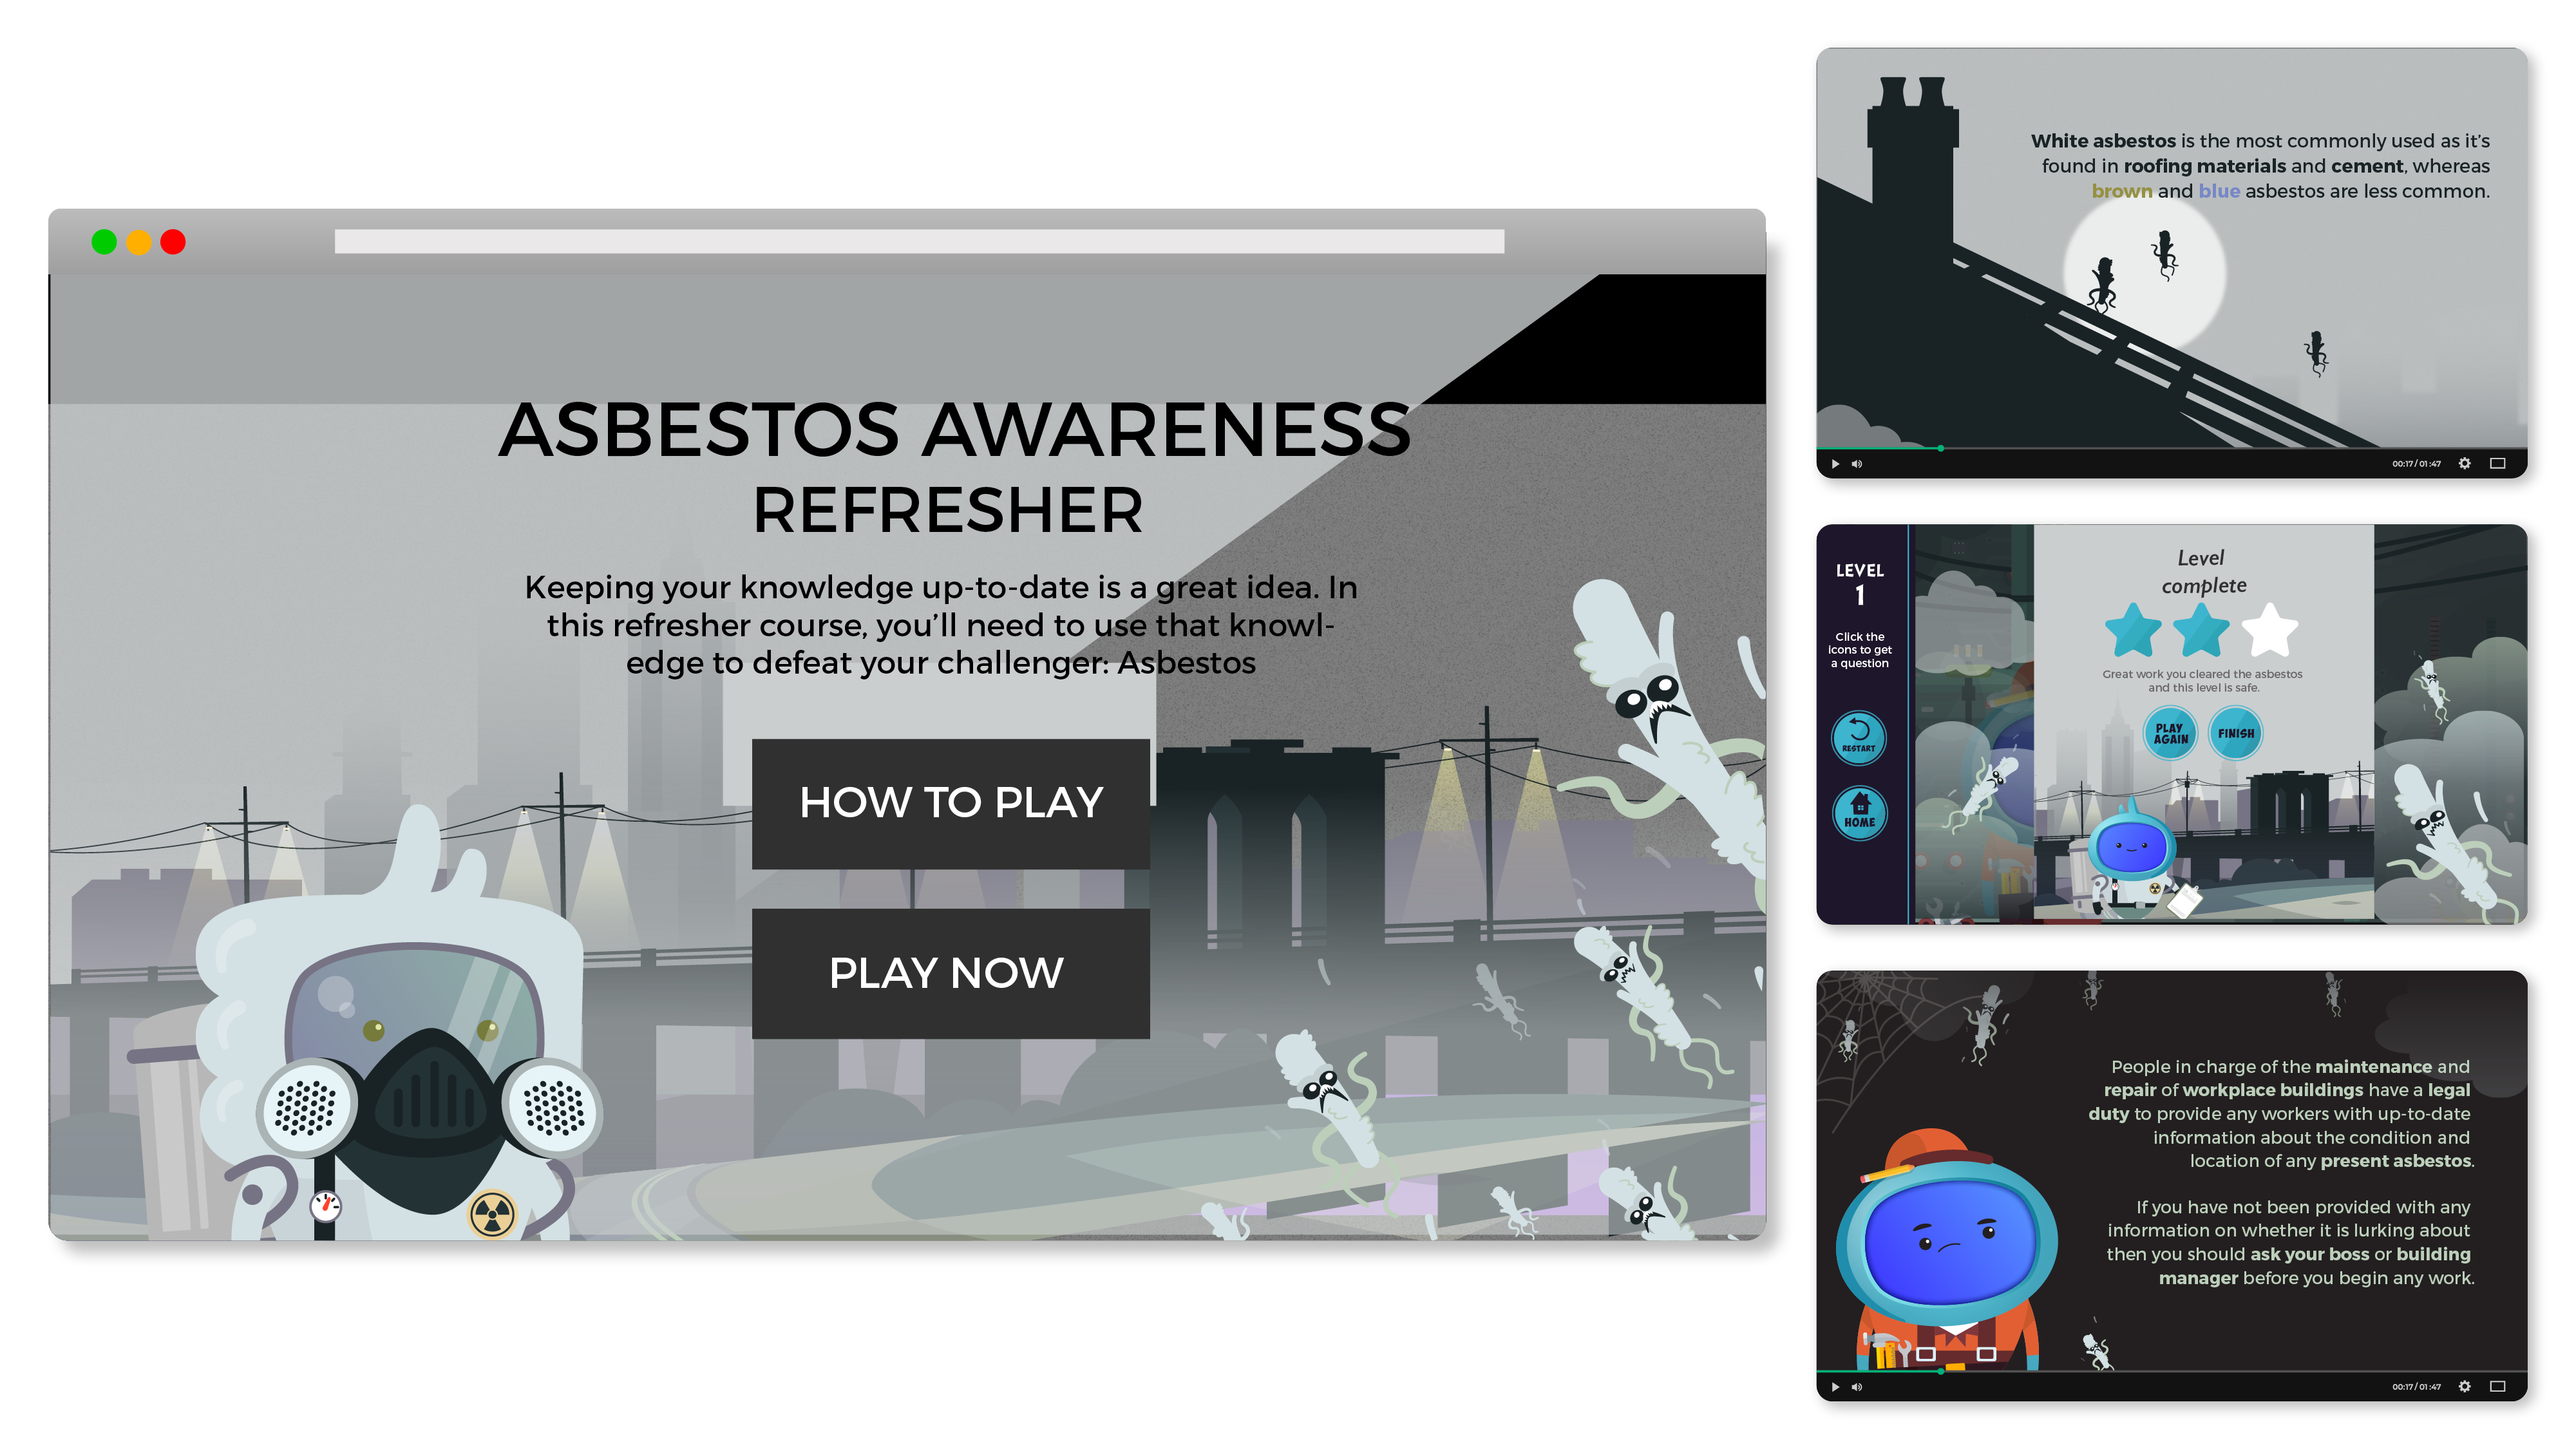 iAM Asbestos Awareness (Refresher) Landing Page Image 2